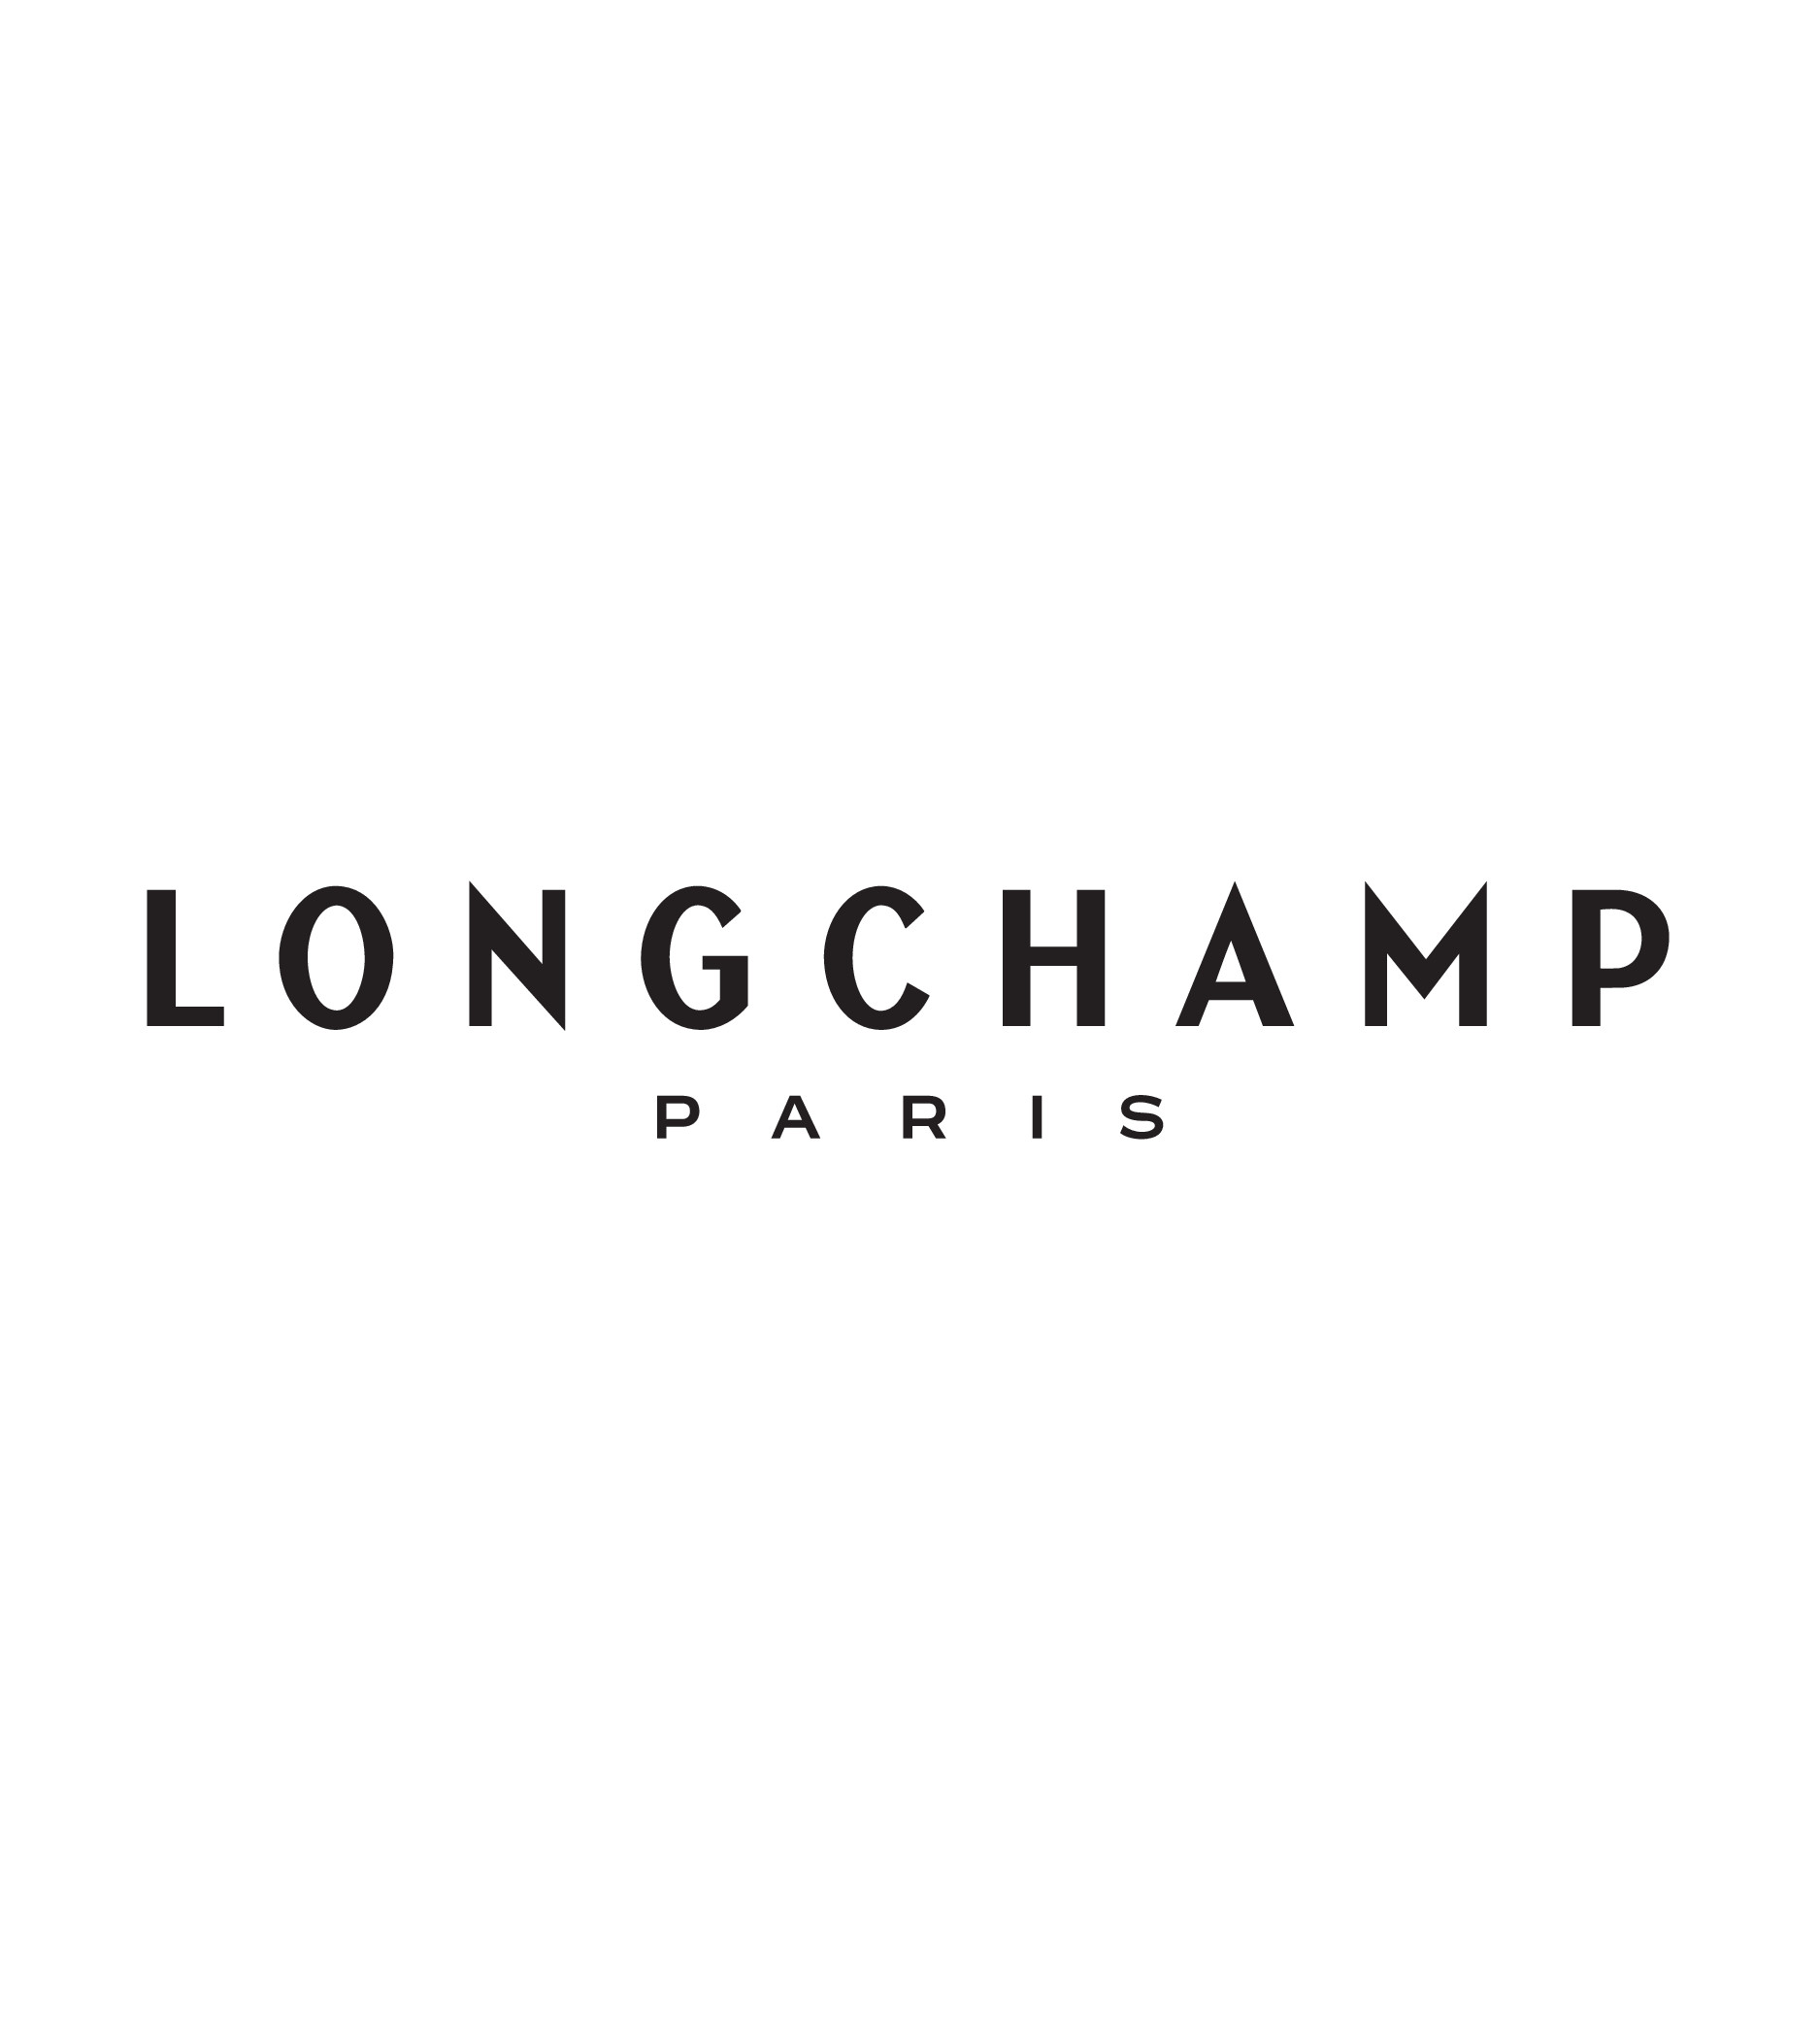 longchamp paris logo